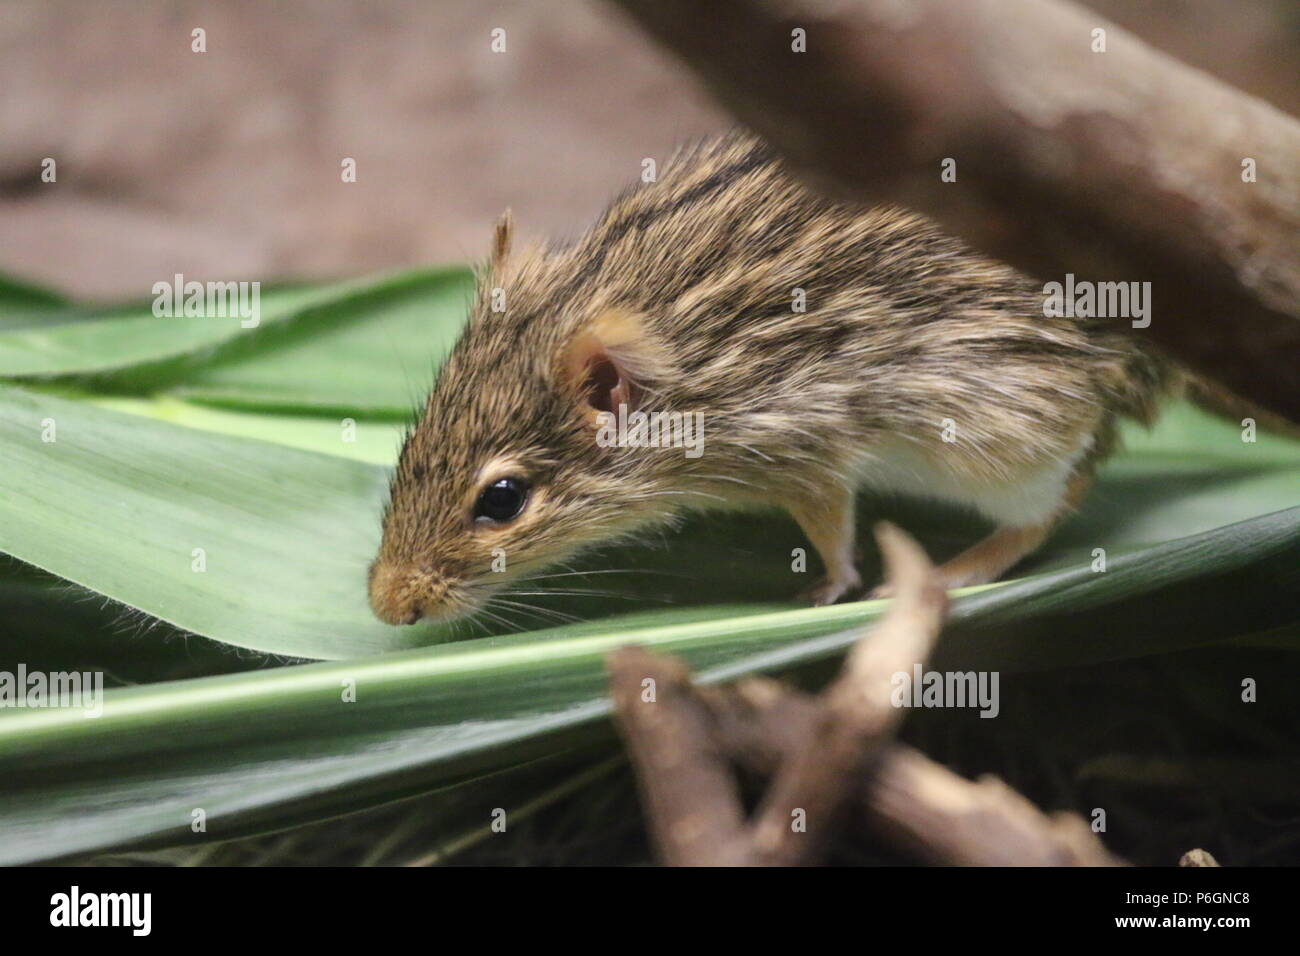 Striped grass mouse - Lemniscomys Stock Photo